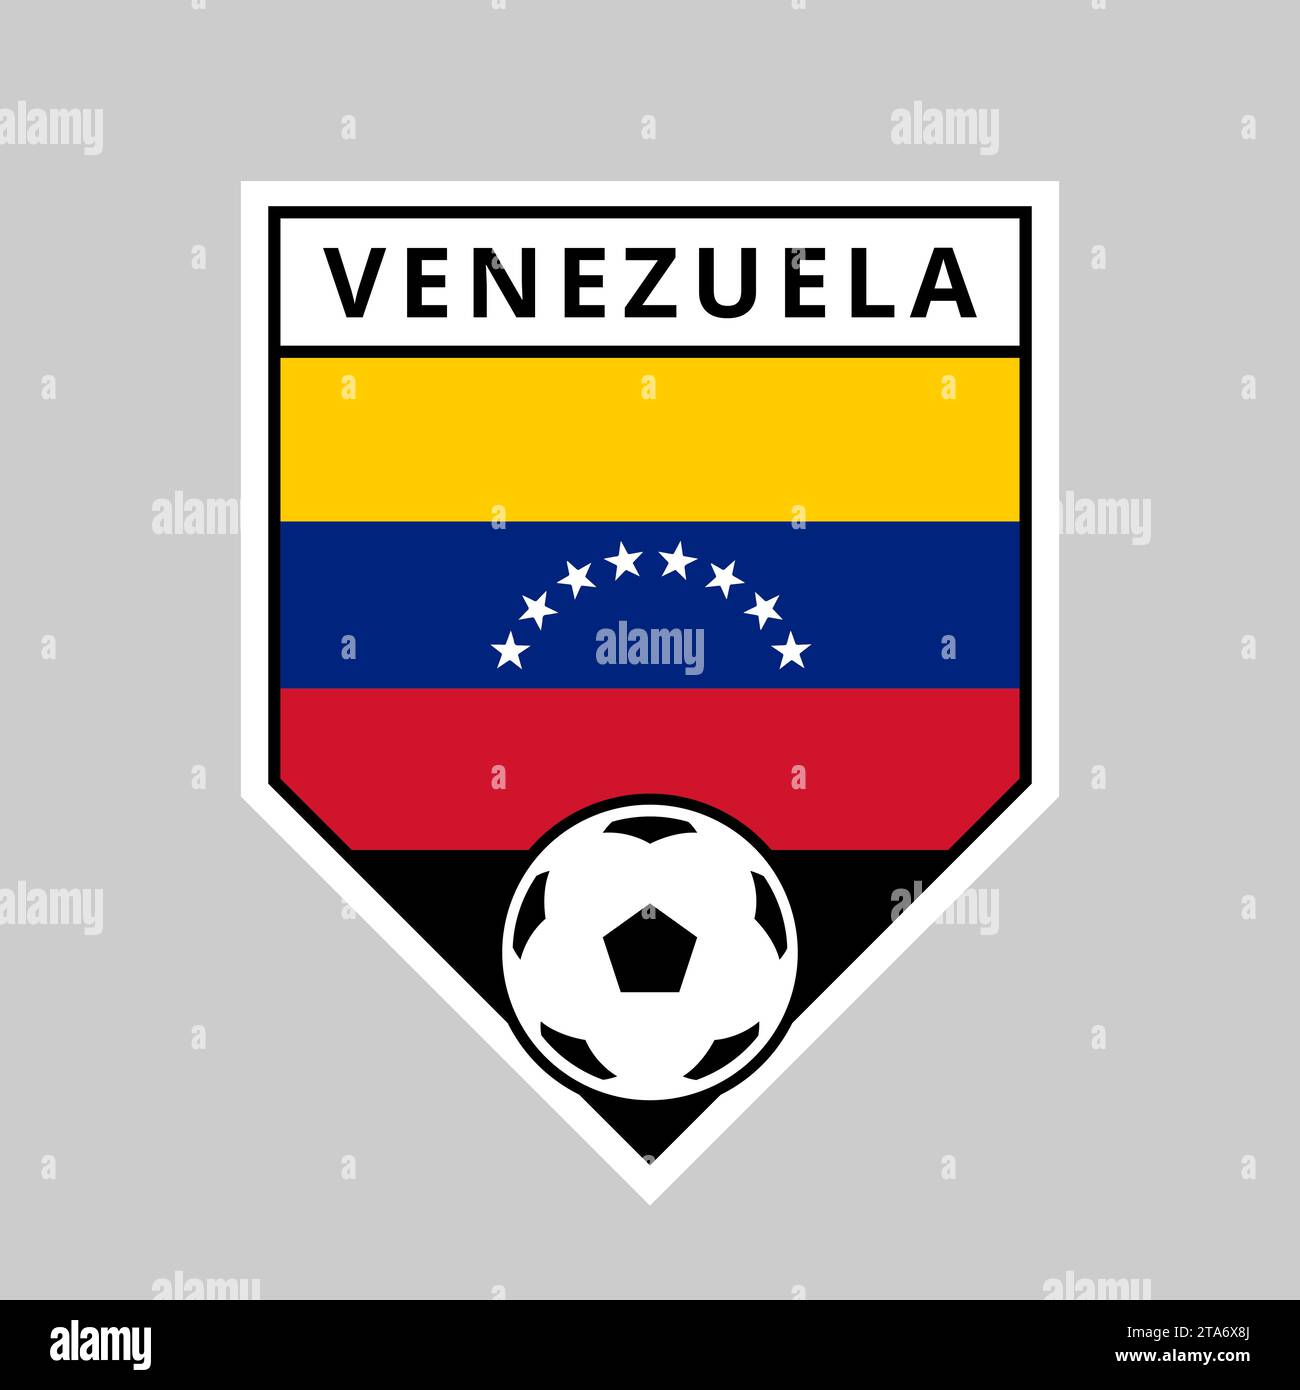 Illustration of Angled Shield Team Badge of Venezuela for Football Tournament Stock Vector